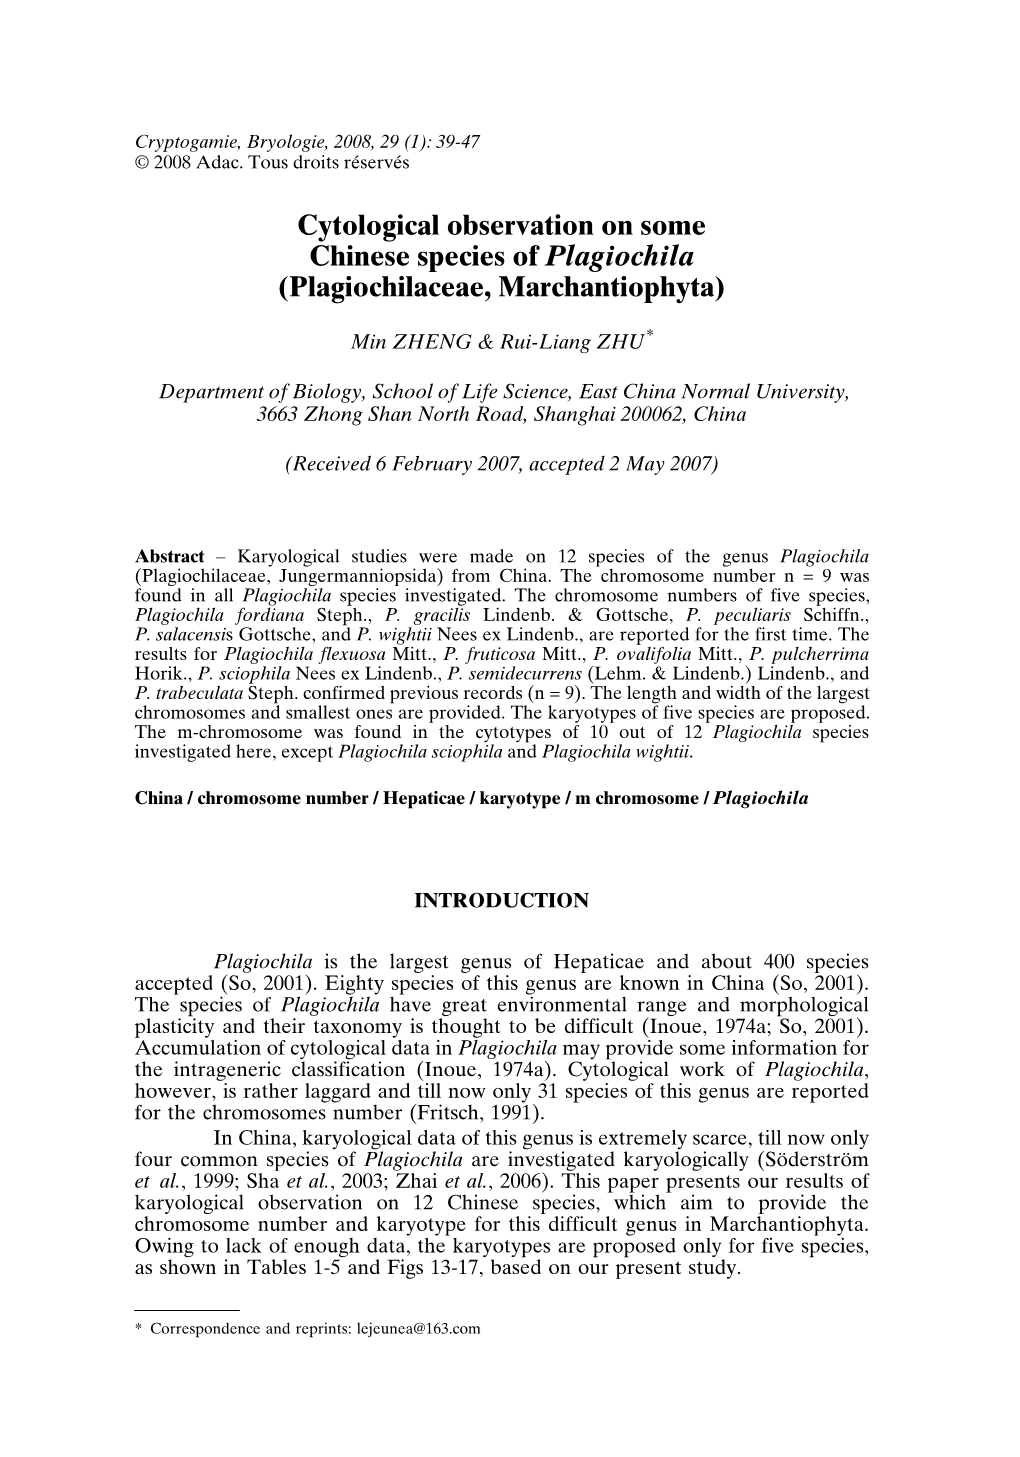 Cytological Observation on Some Chinese Species of Plagiochila (Plagiochilaceae, Marchantiophyta)